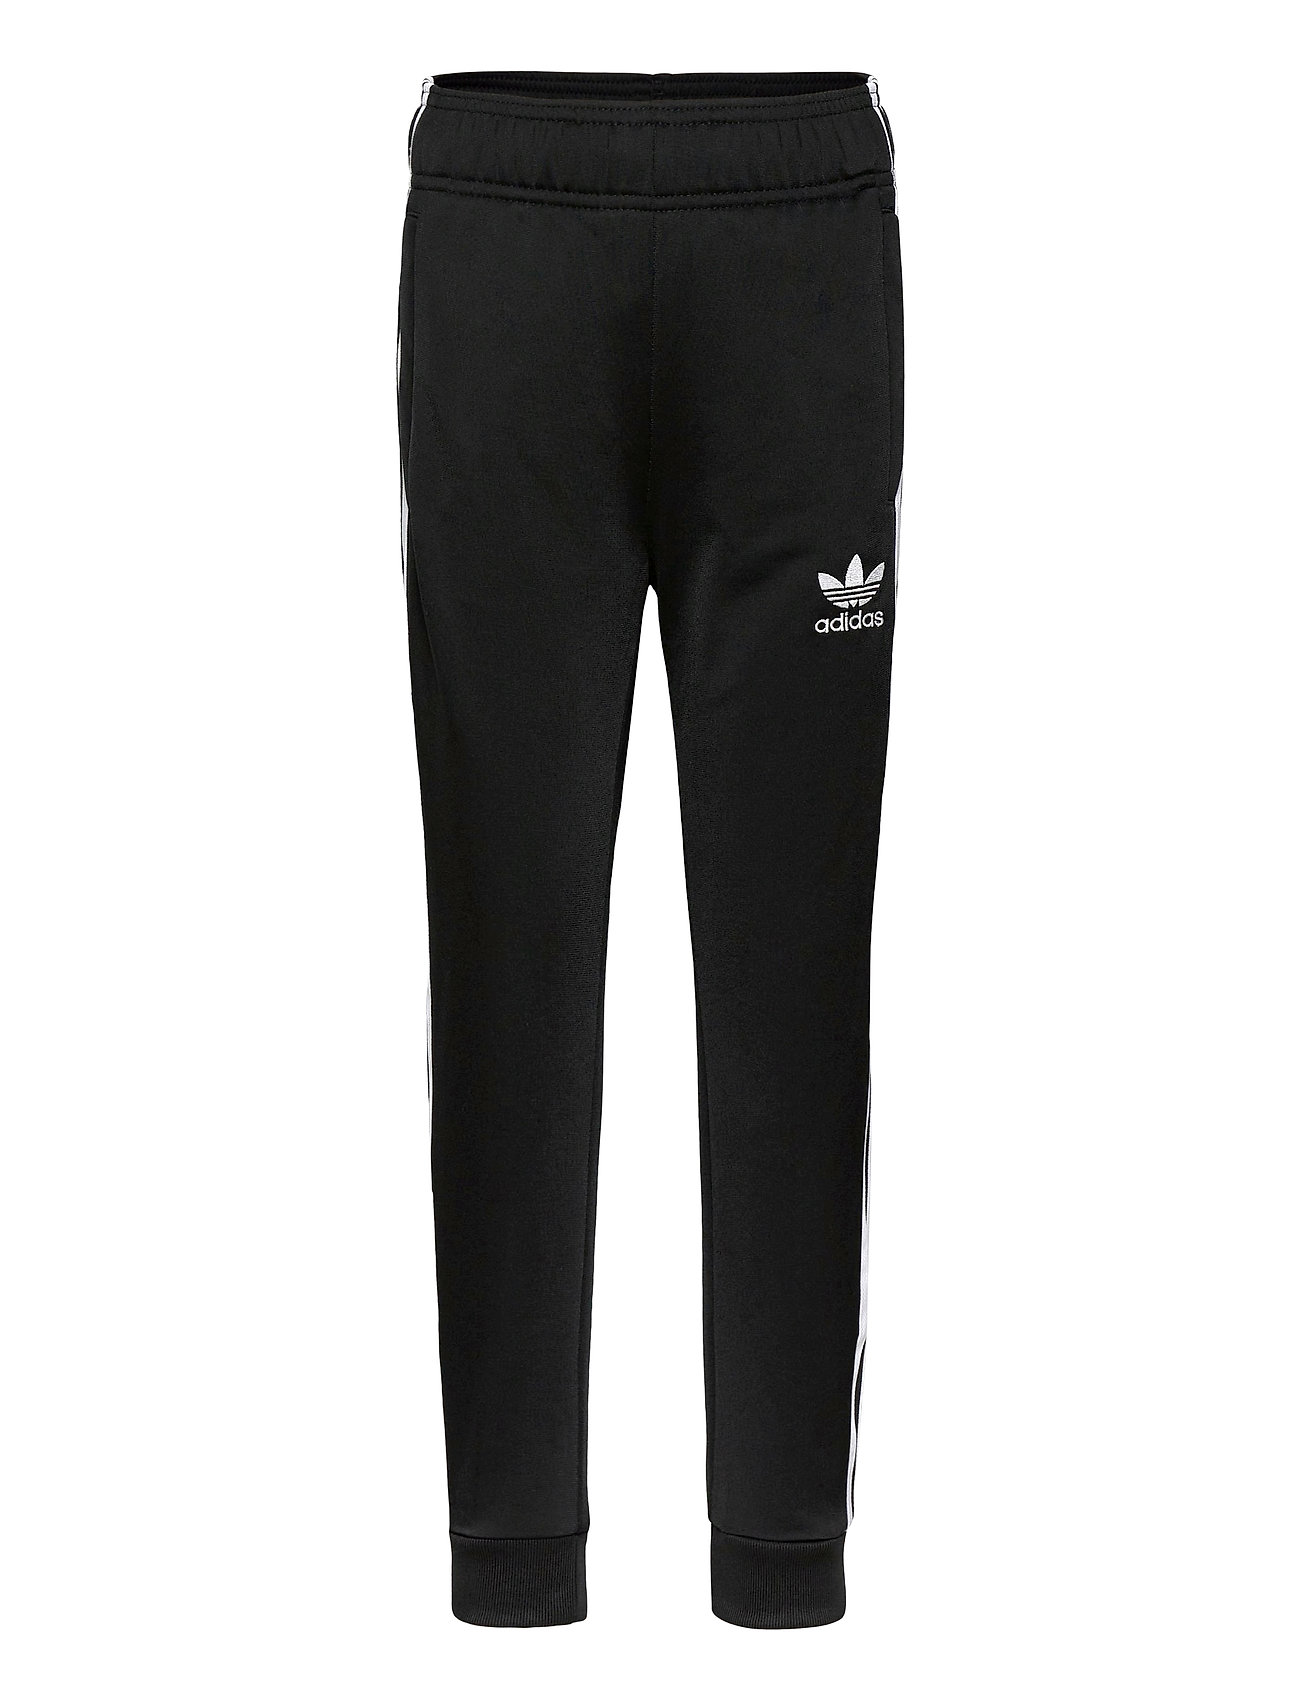 Adicolor Superstar Track Pants Collegehousut Olohousut Musta Adidas Originals, adidas Originals